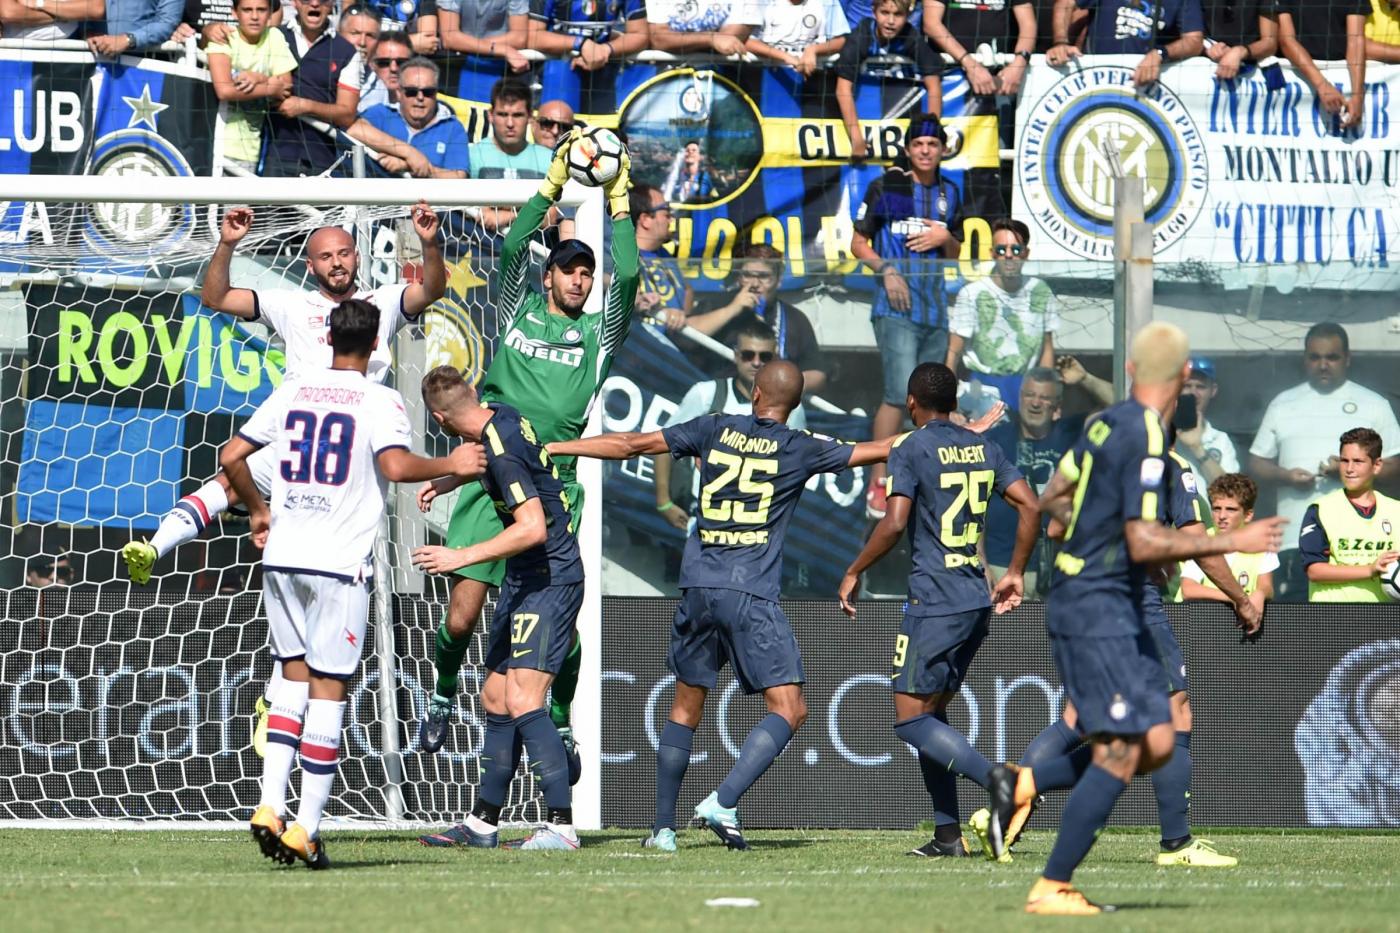 Crotone Inter : Highlights Crotone-Inter 2-1, video gol Serie A 9 ...